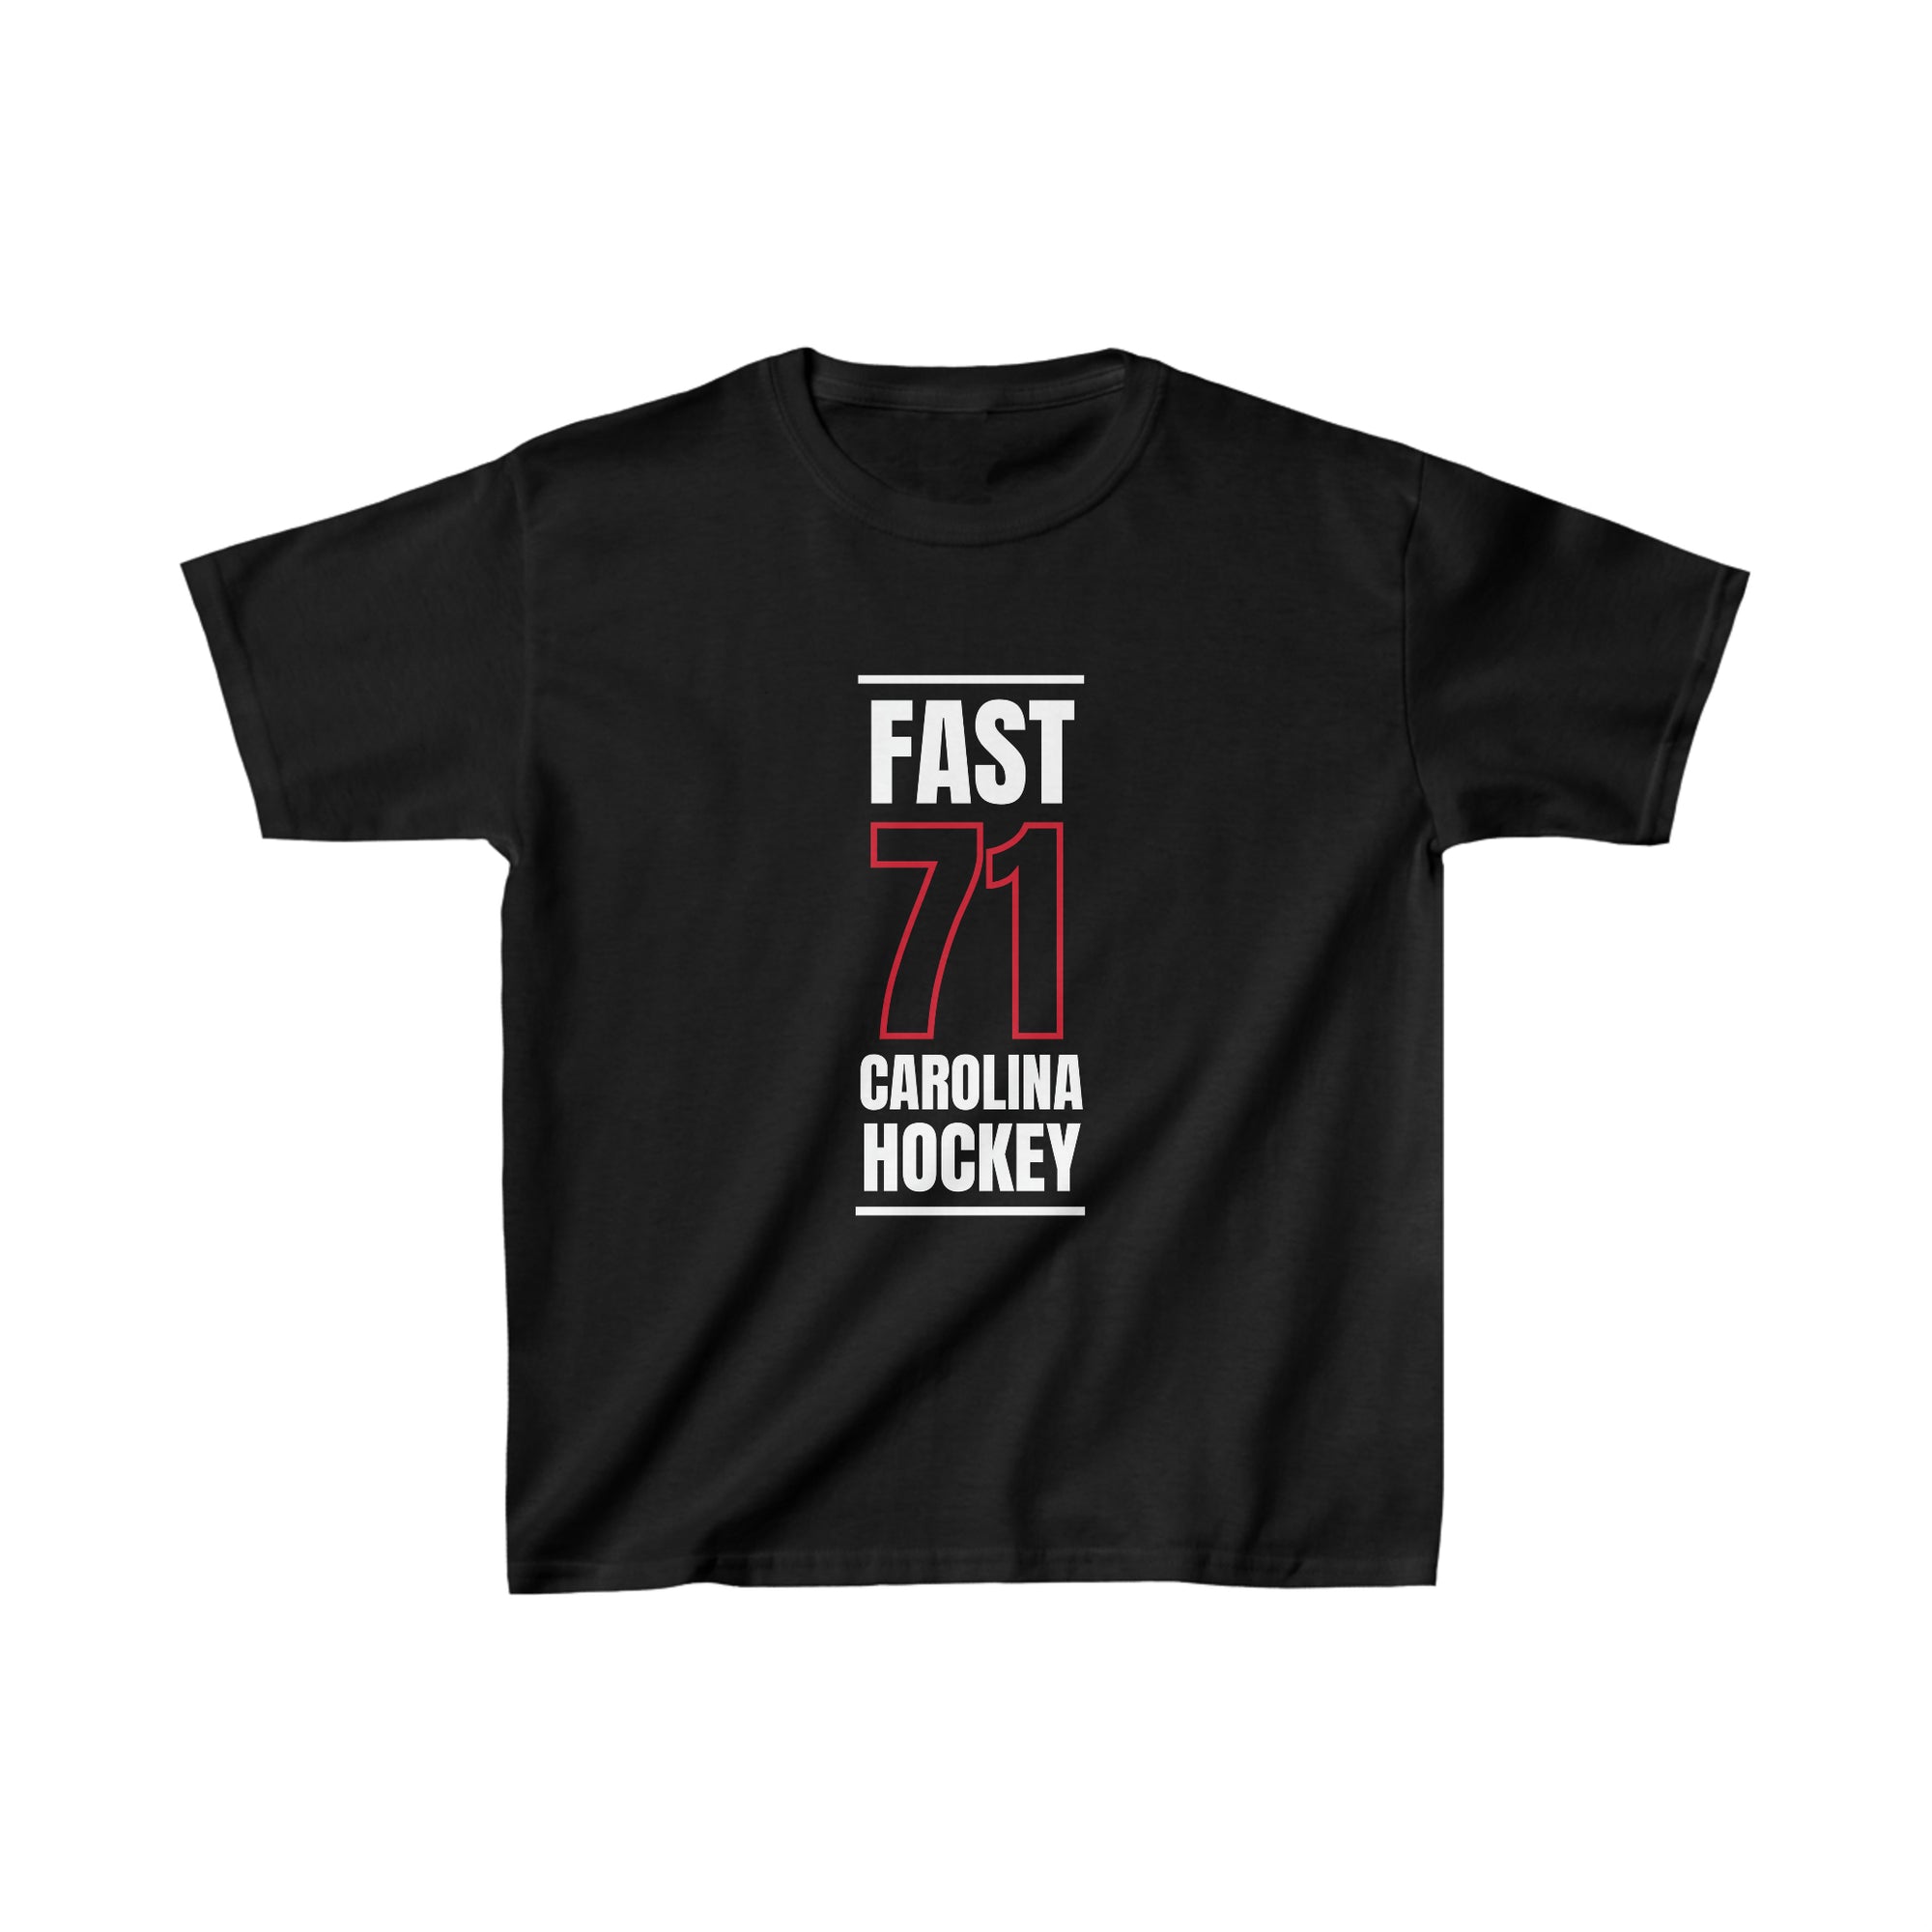 Fast 71 Carolina Hockey Black Vertical Design Kids Tee